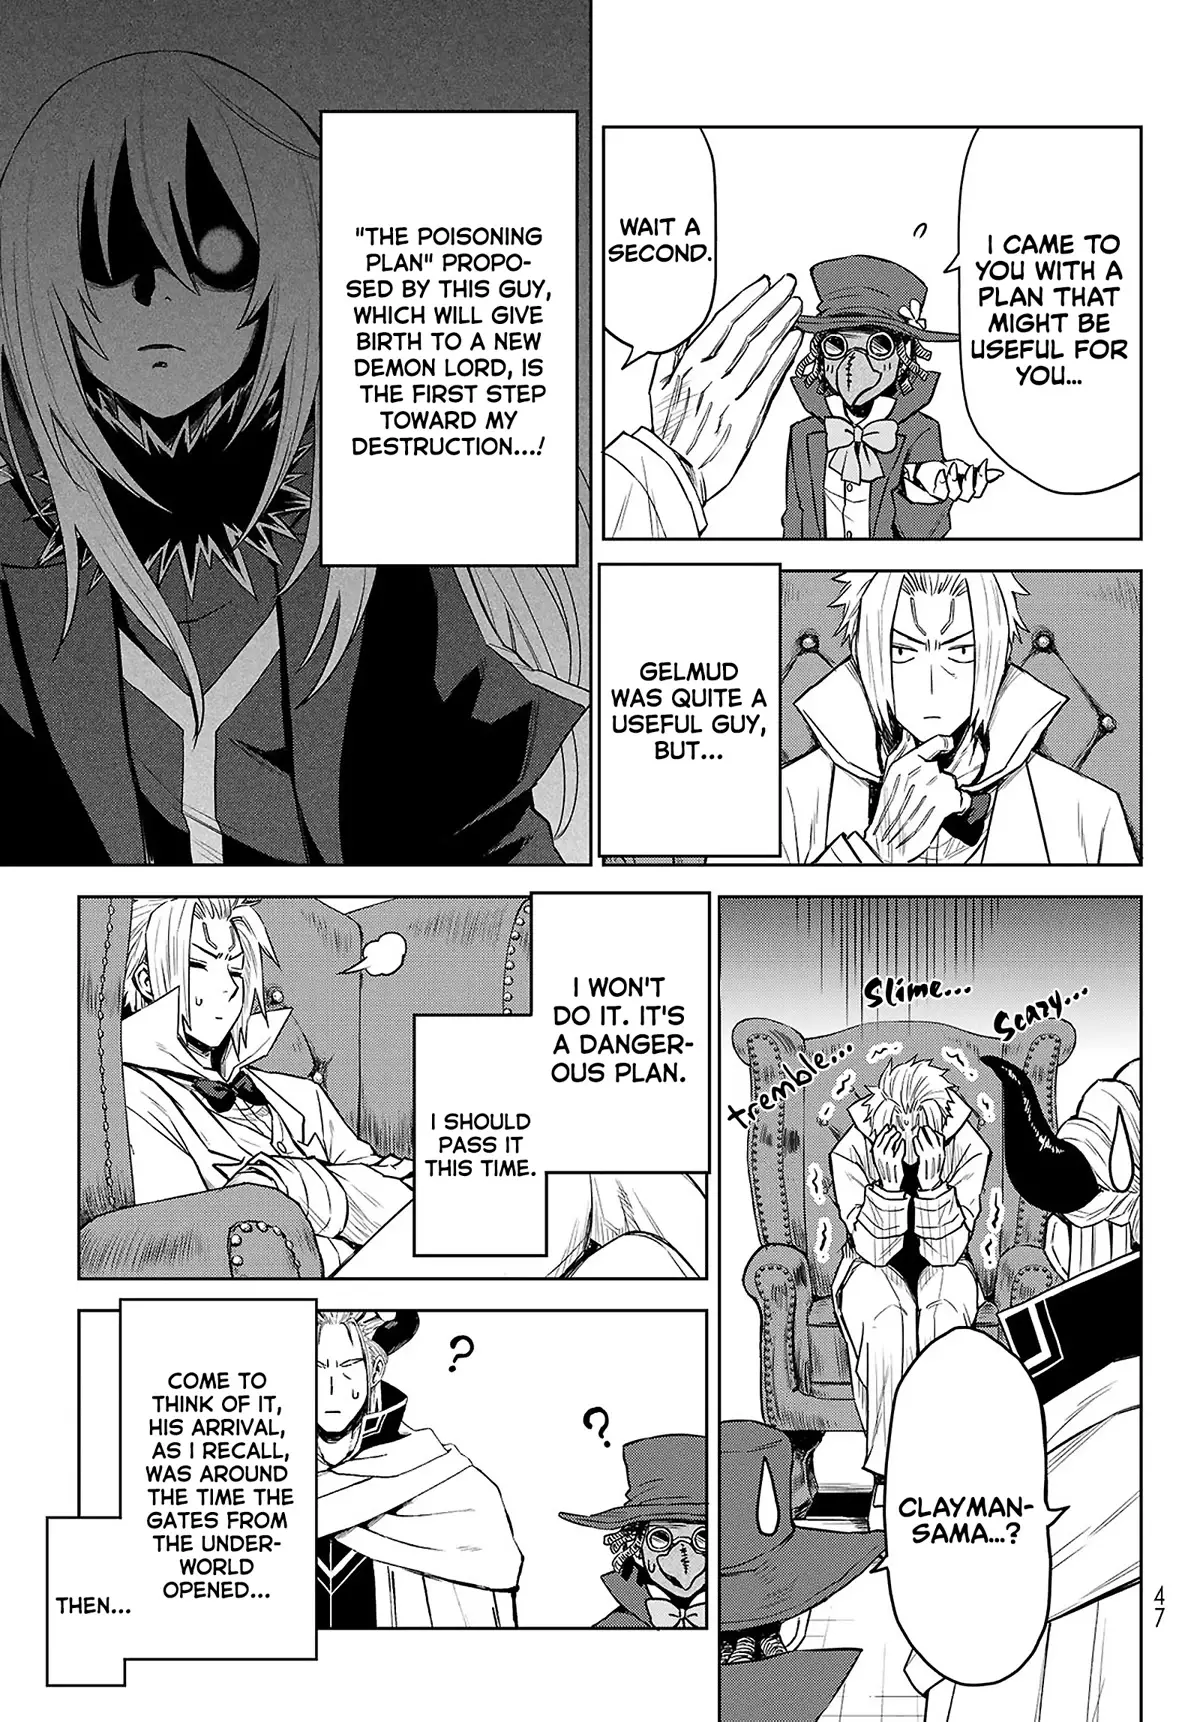 Tensei Shitara Slime Datta Ken: Clayman Revenge - 7 page 7-3189968c